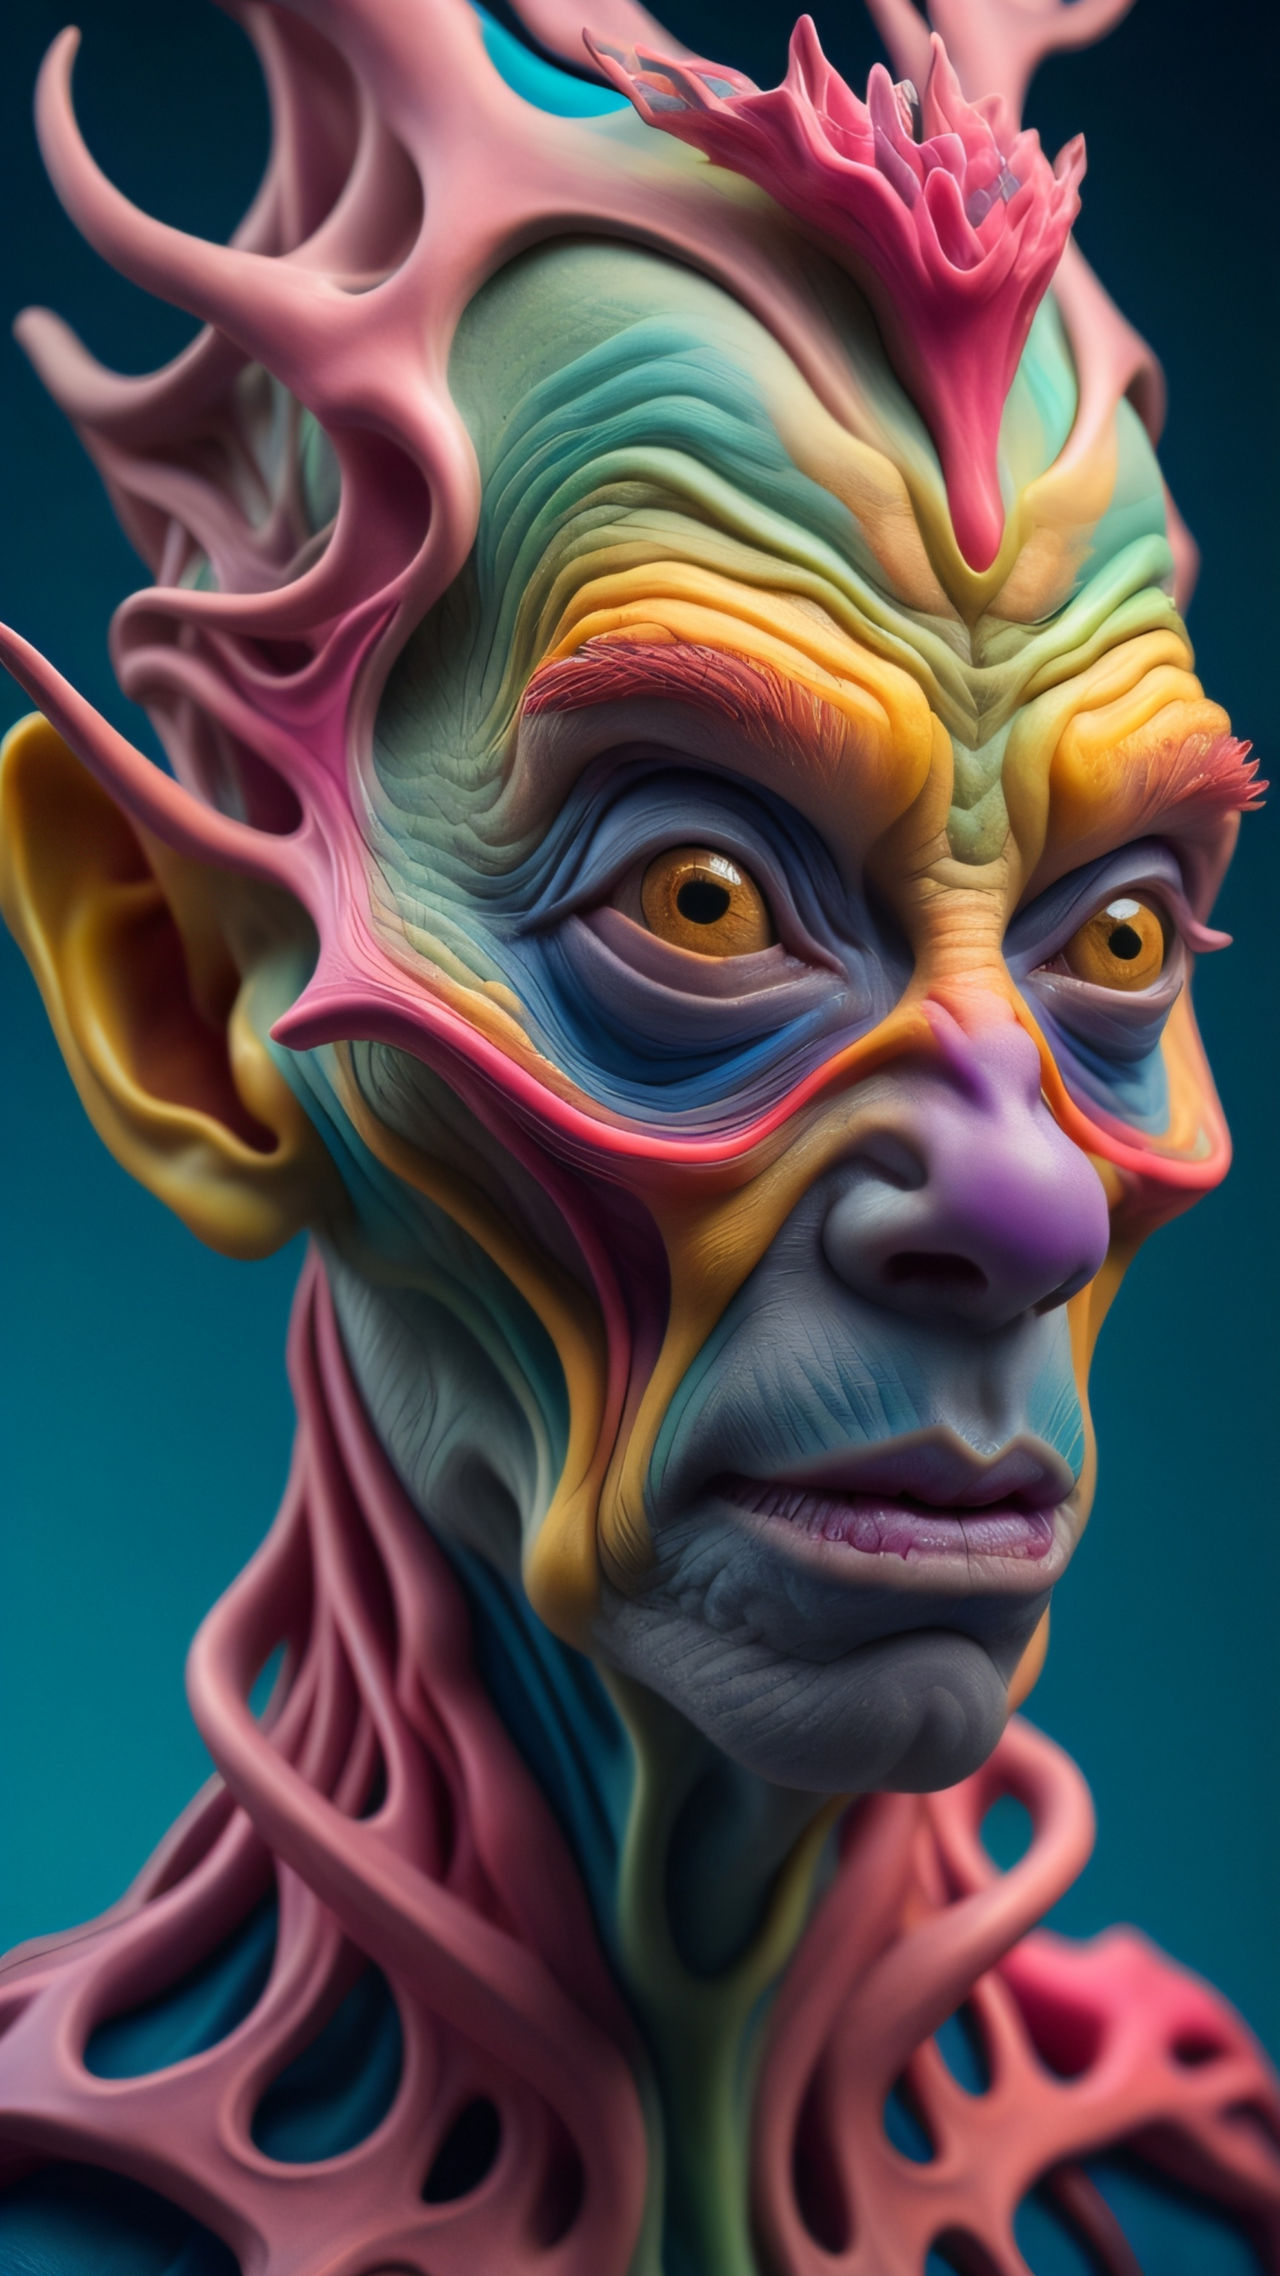 Beautiful 3d rendering ultra-realistic ultra-detaile